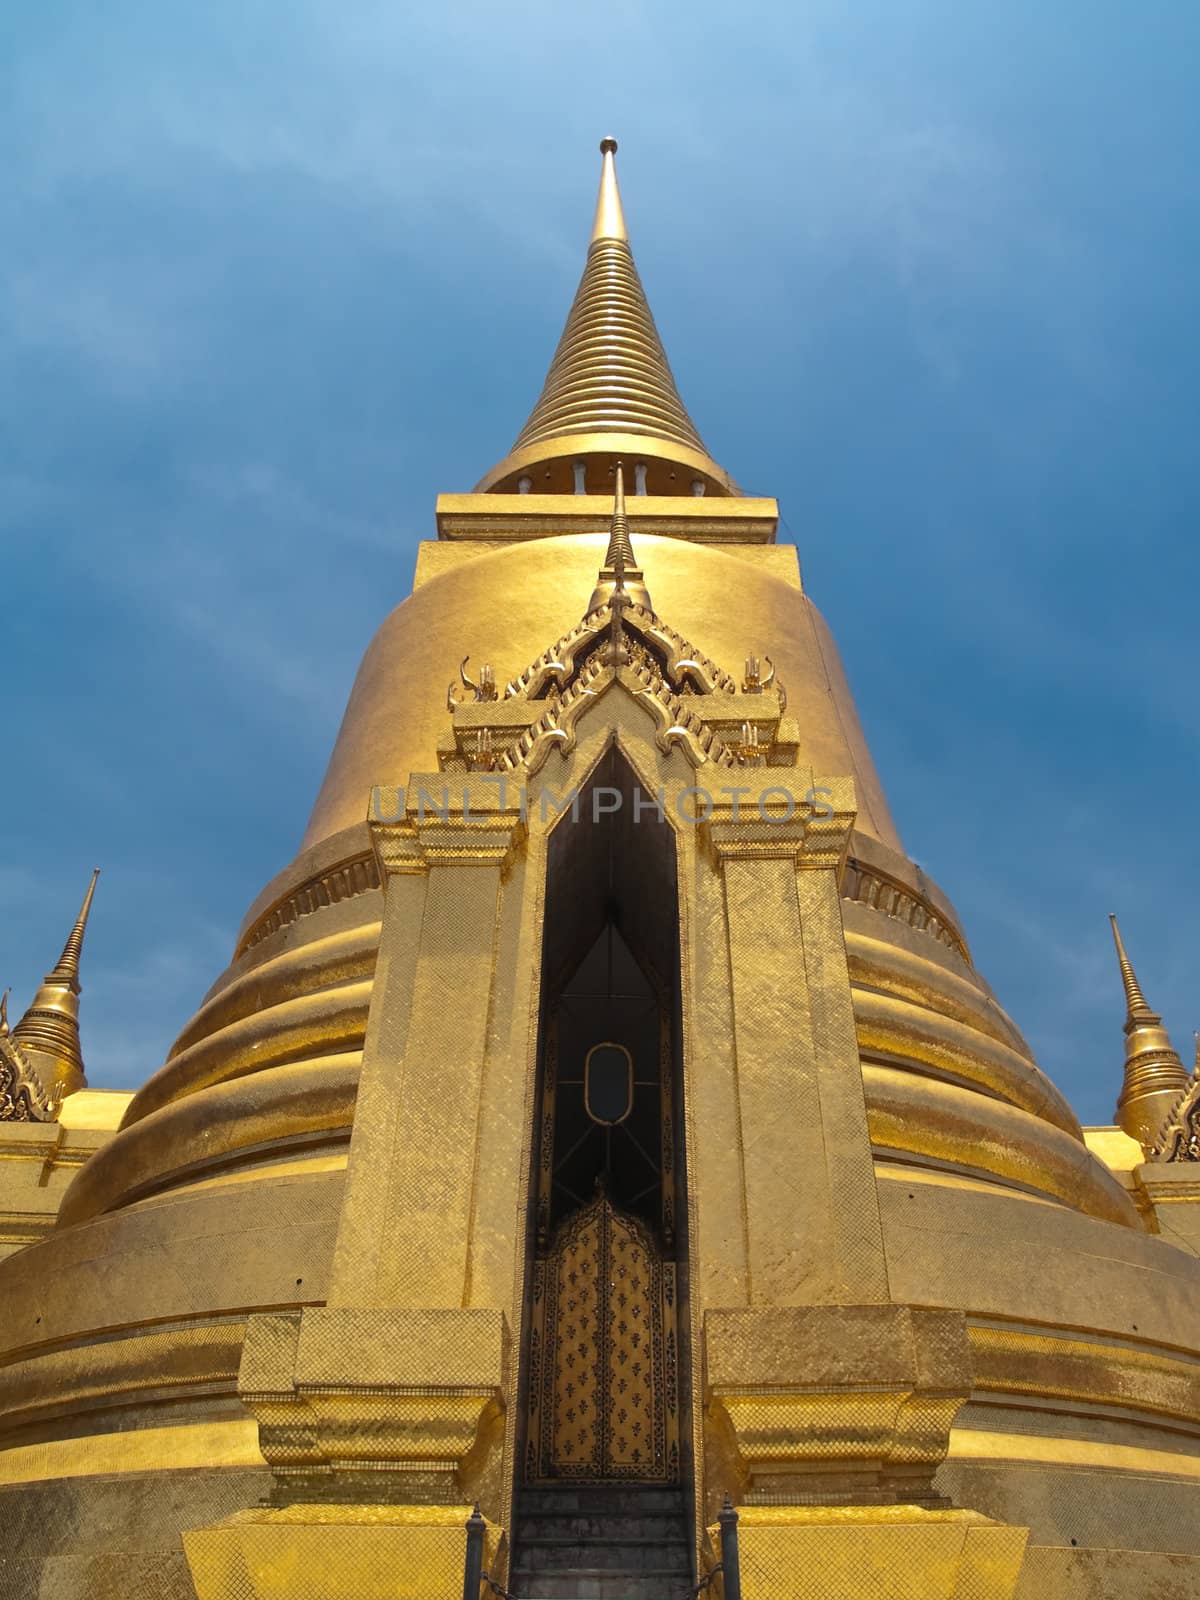 Phra Sri Ratana Chedi in Temple of The Emerald Buddha (Wat Phra Kaew), Bangkok, Thailand